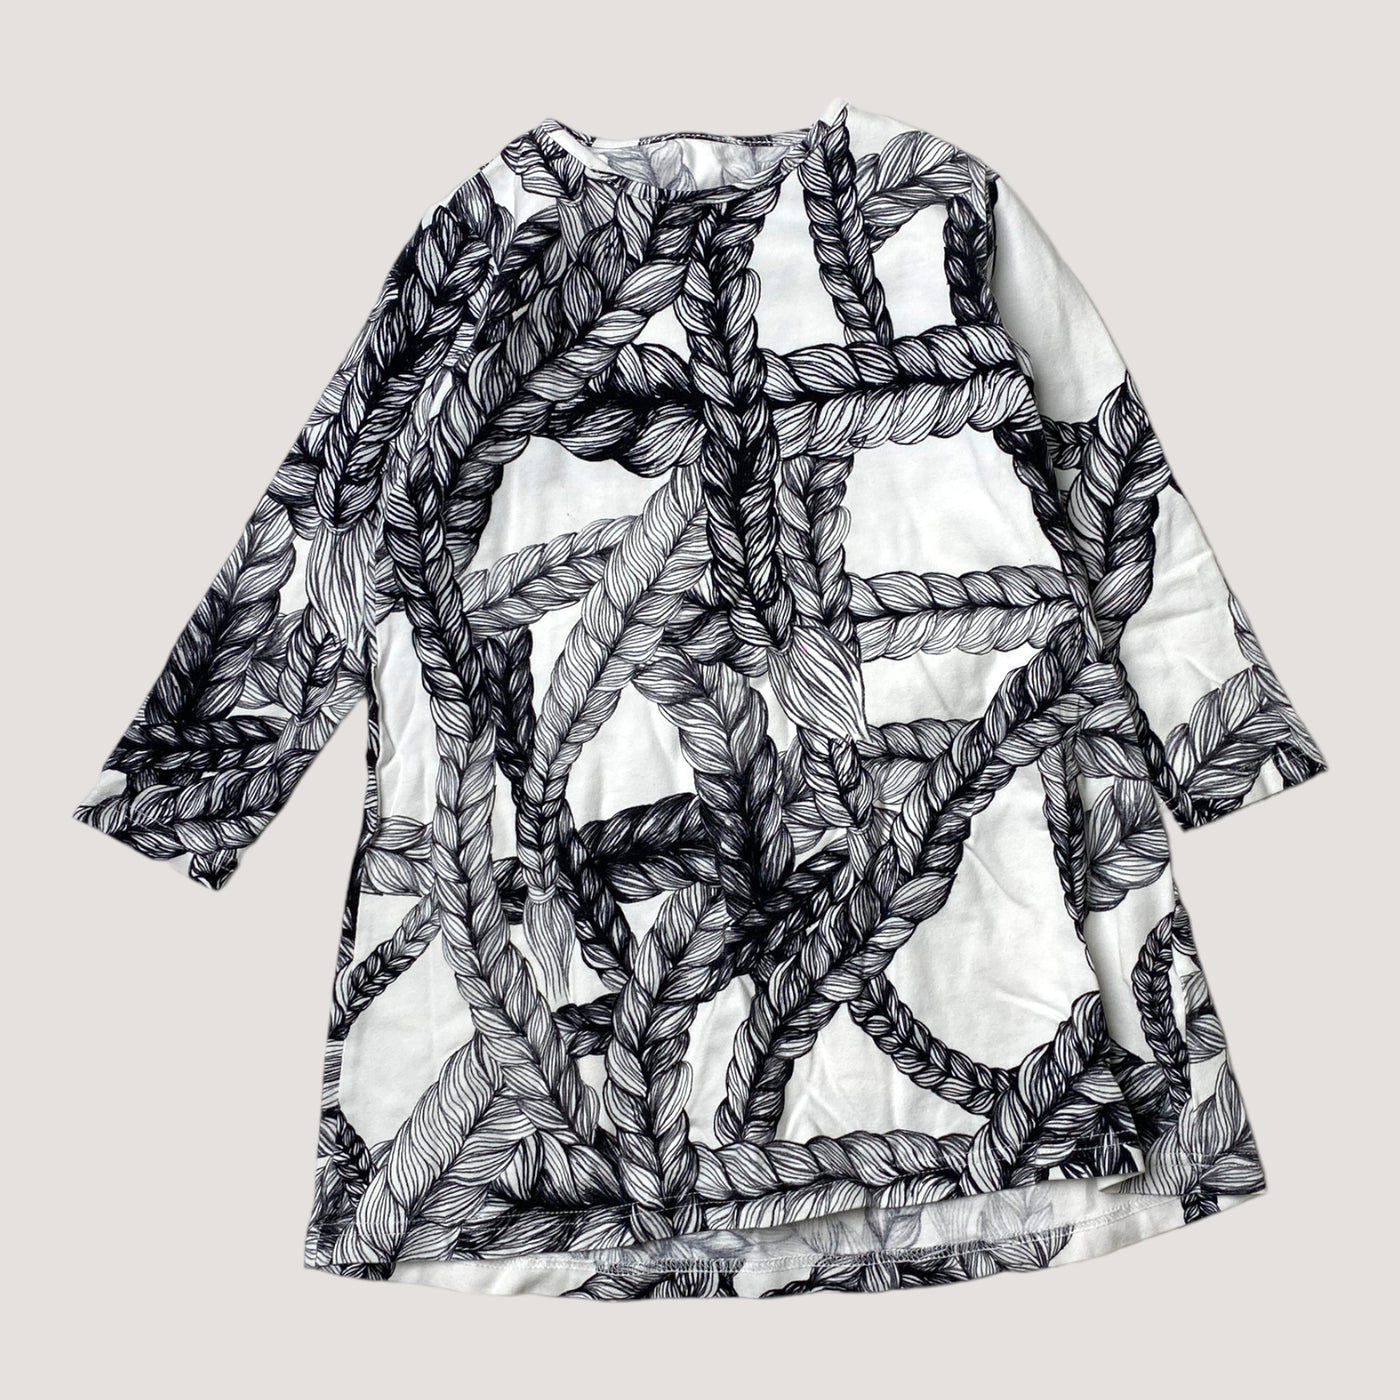 Vimma letti dress, black/white | 110cm